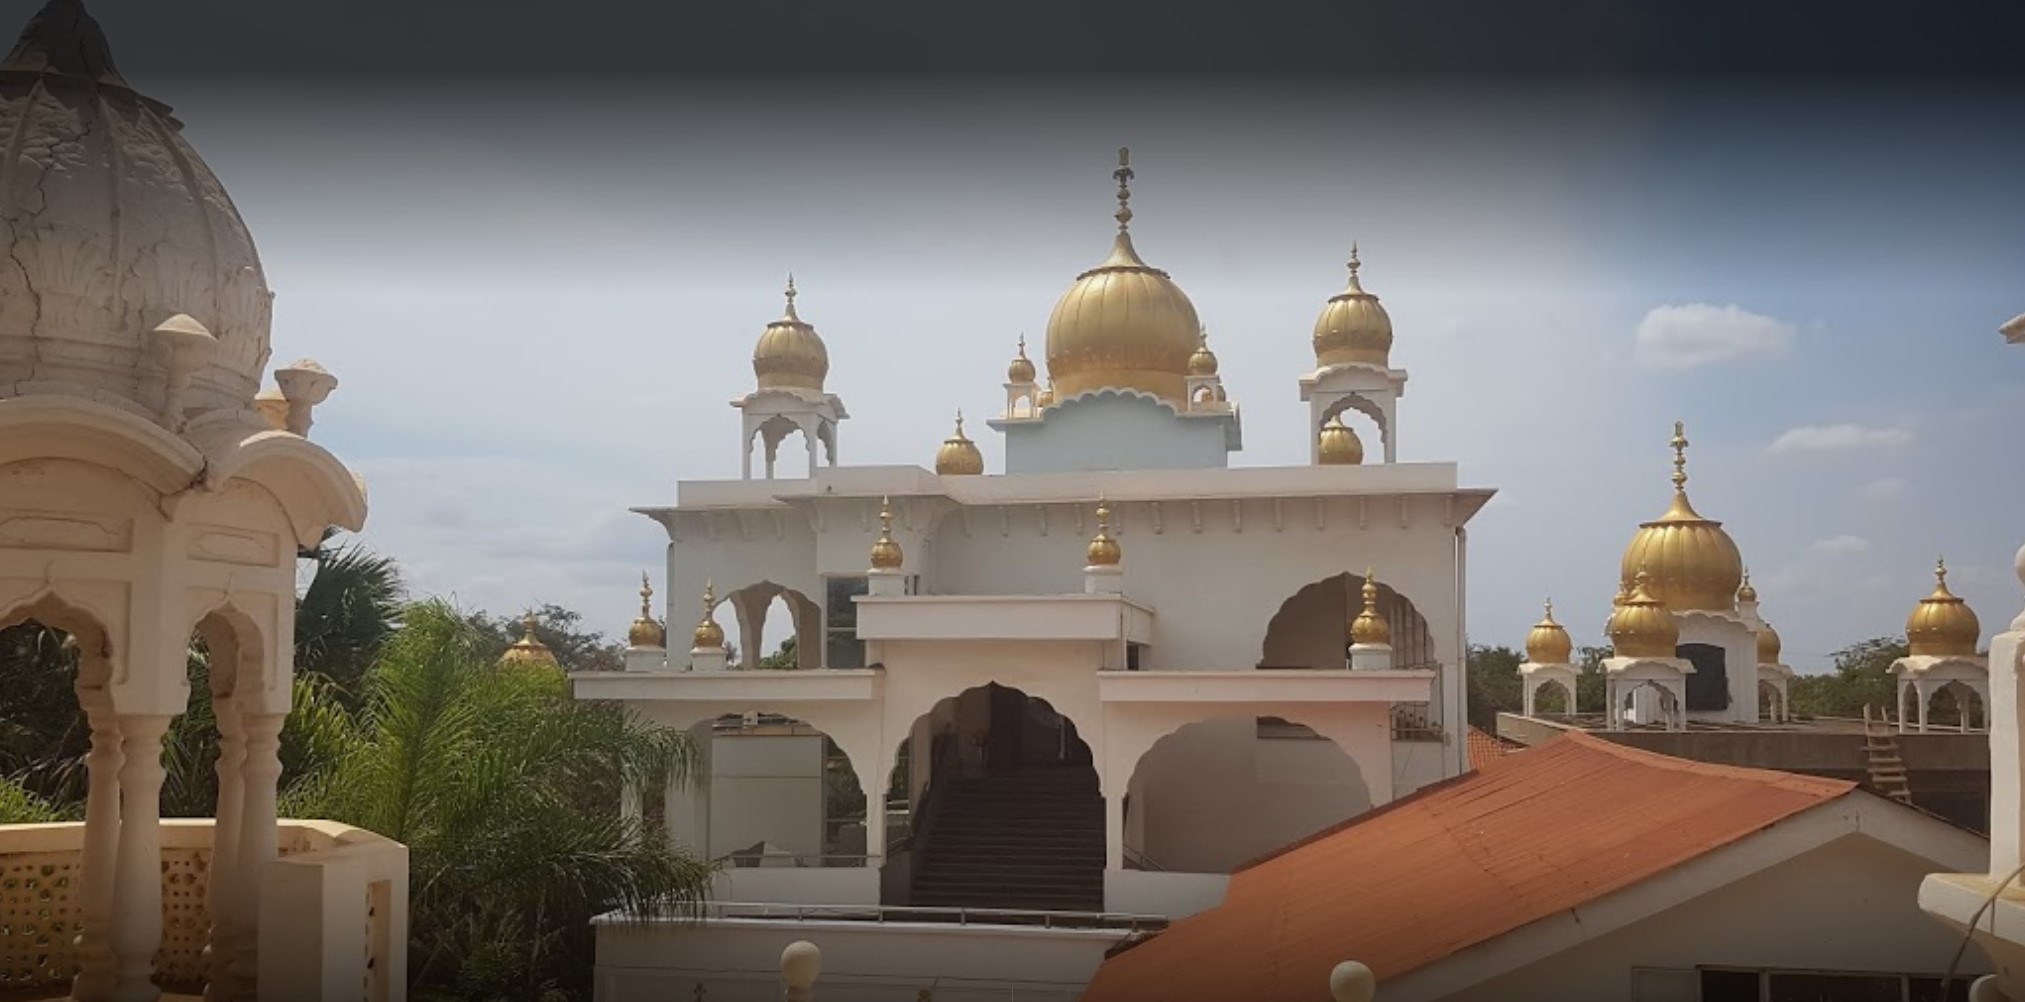 Makindu Sikh Temple